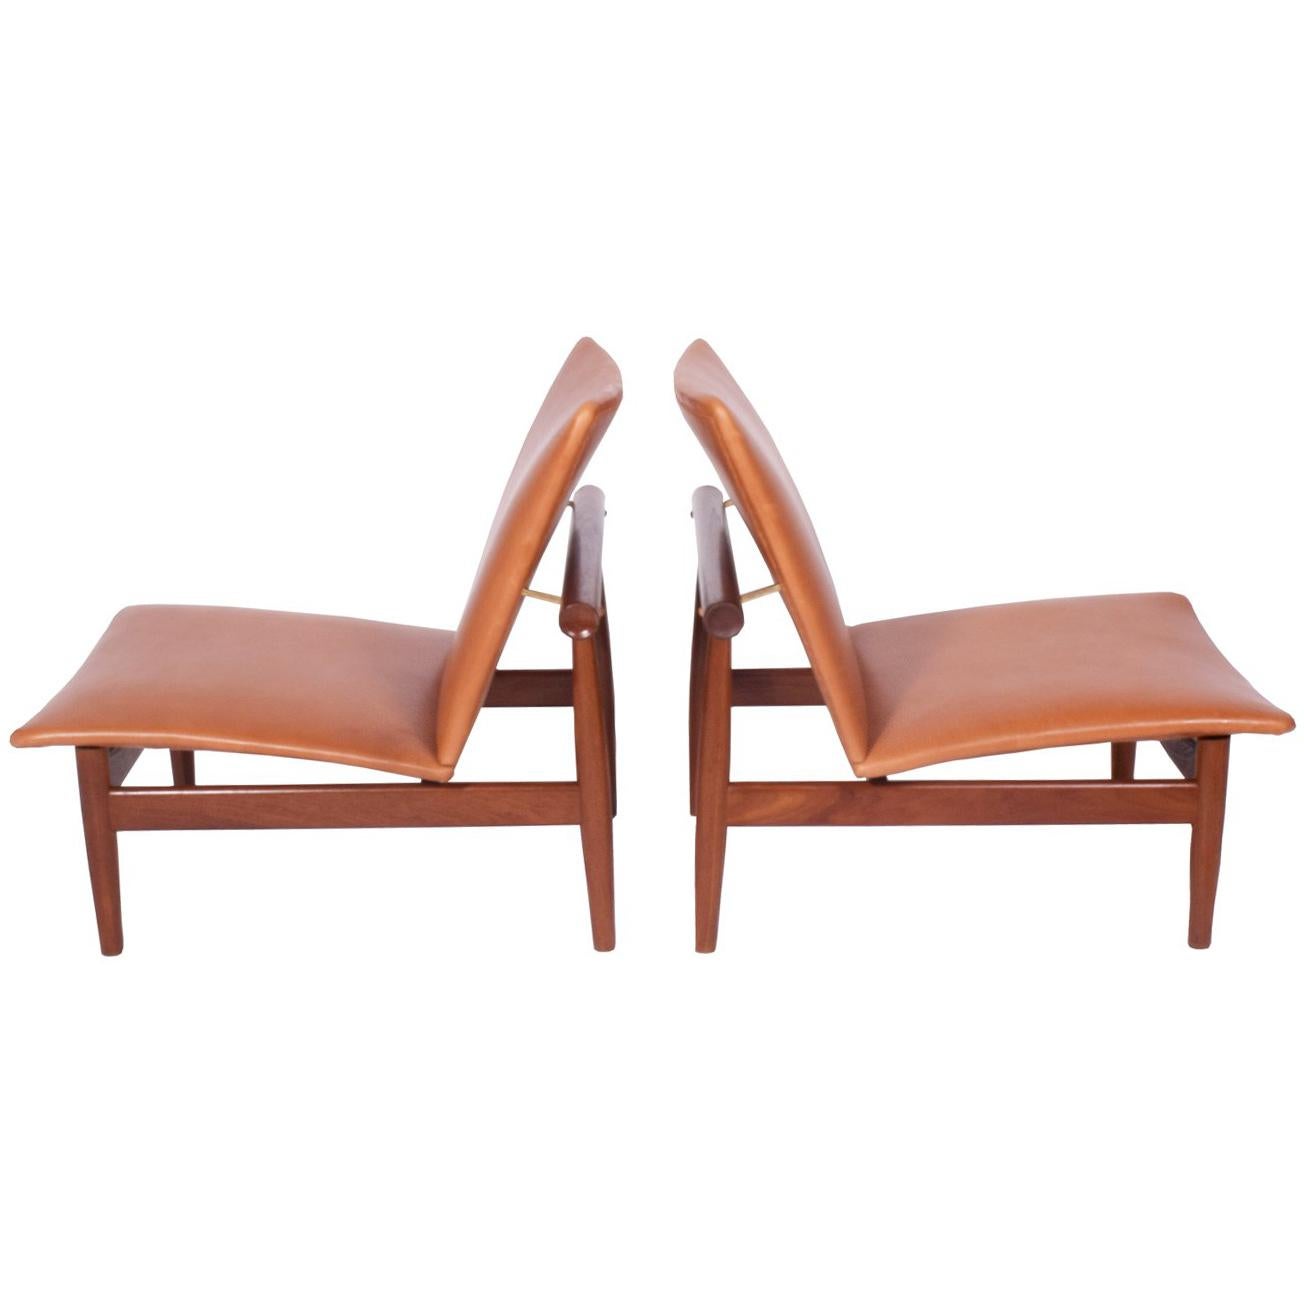 Pair of Finn Juhl Easy Chairs "No.137" for France & Søn, 1958